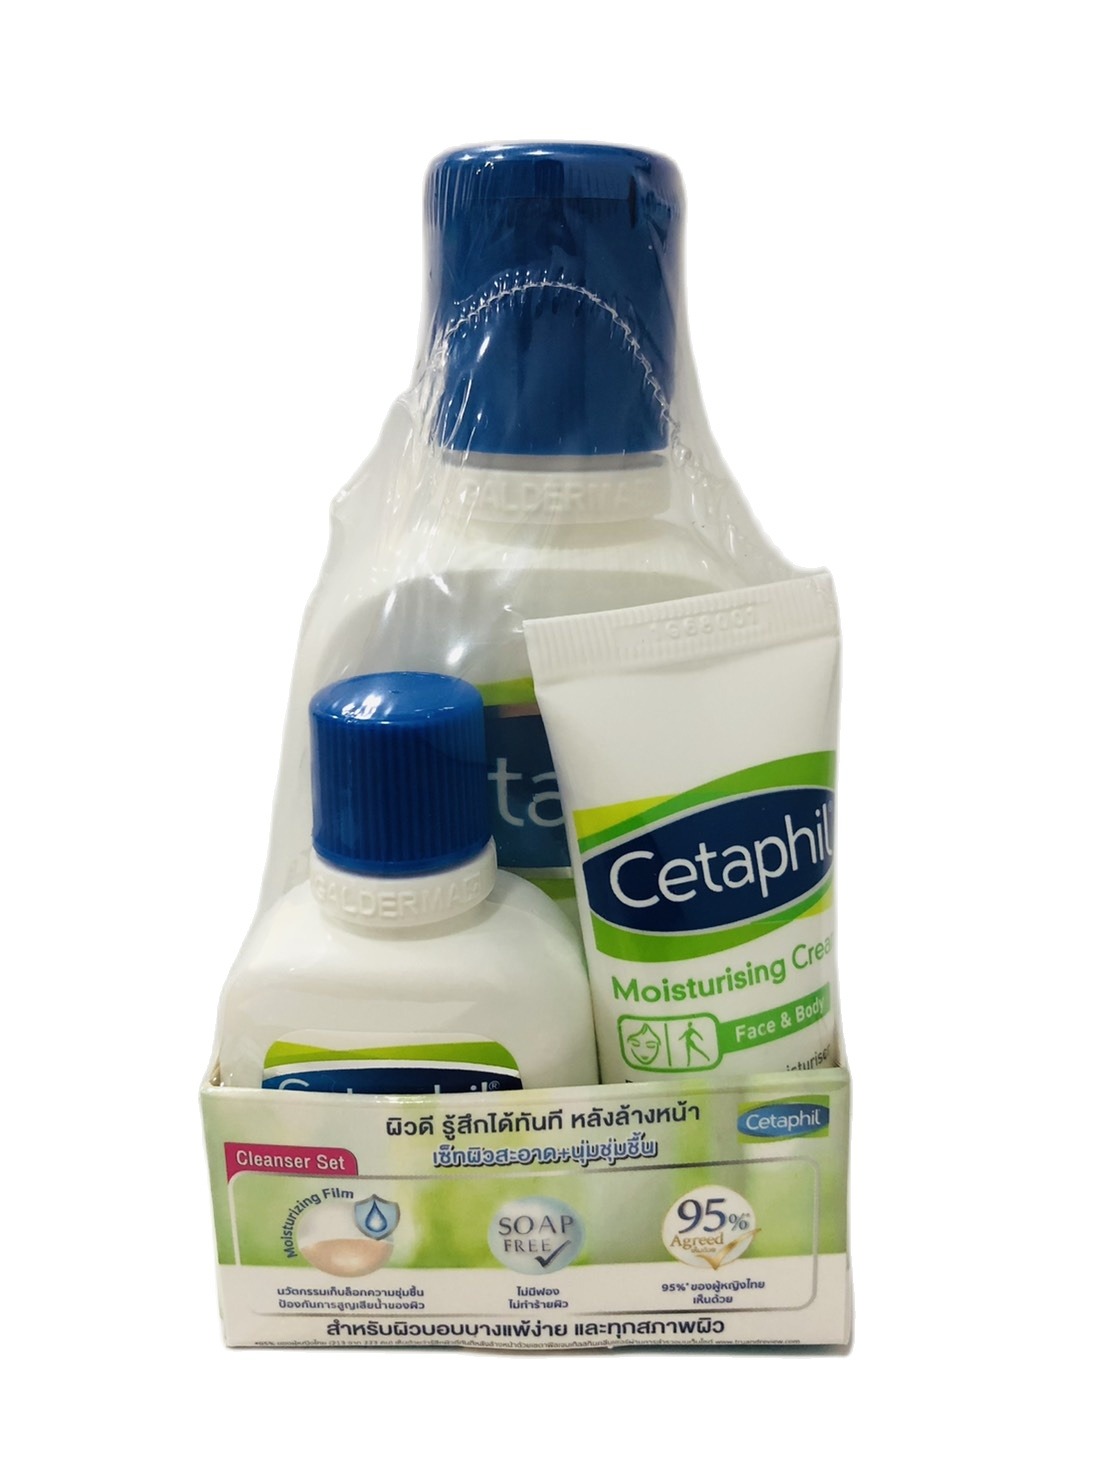 Cetaphil Gentle Cleanser เซตาฟิล คลีนเซอร์125ml. + ของแถม 2 ชิ้น ผลิตภัณฑ์ทำความสะอาดผิวสูตรอ่อนโยนเหมาะกับทุกสภาพผิว